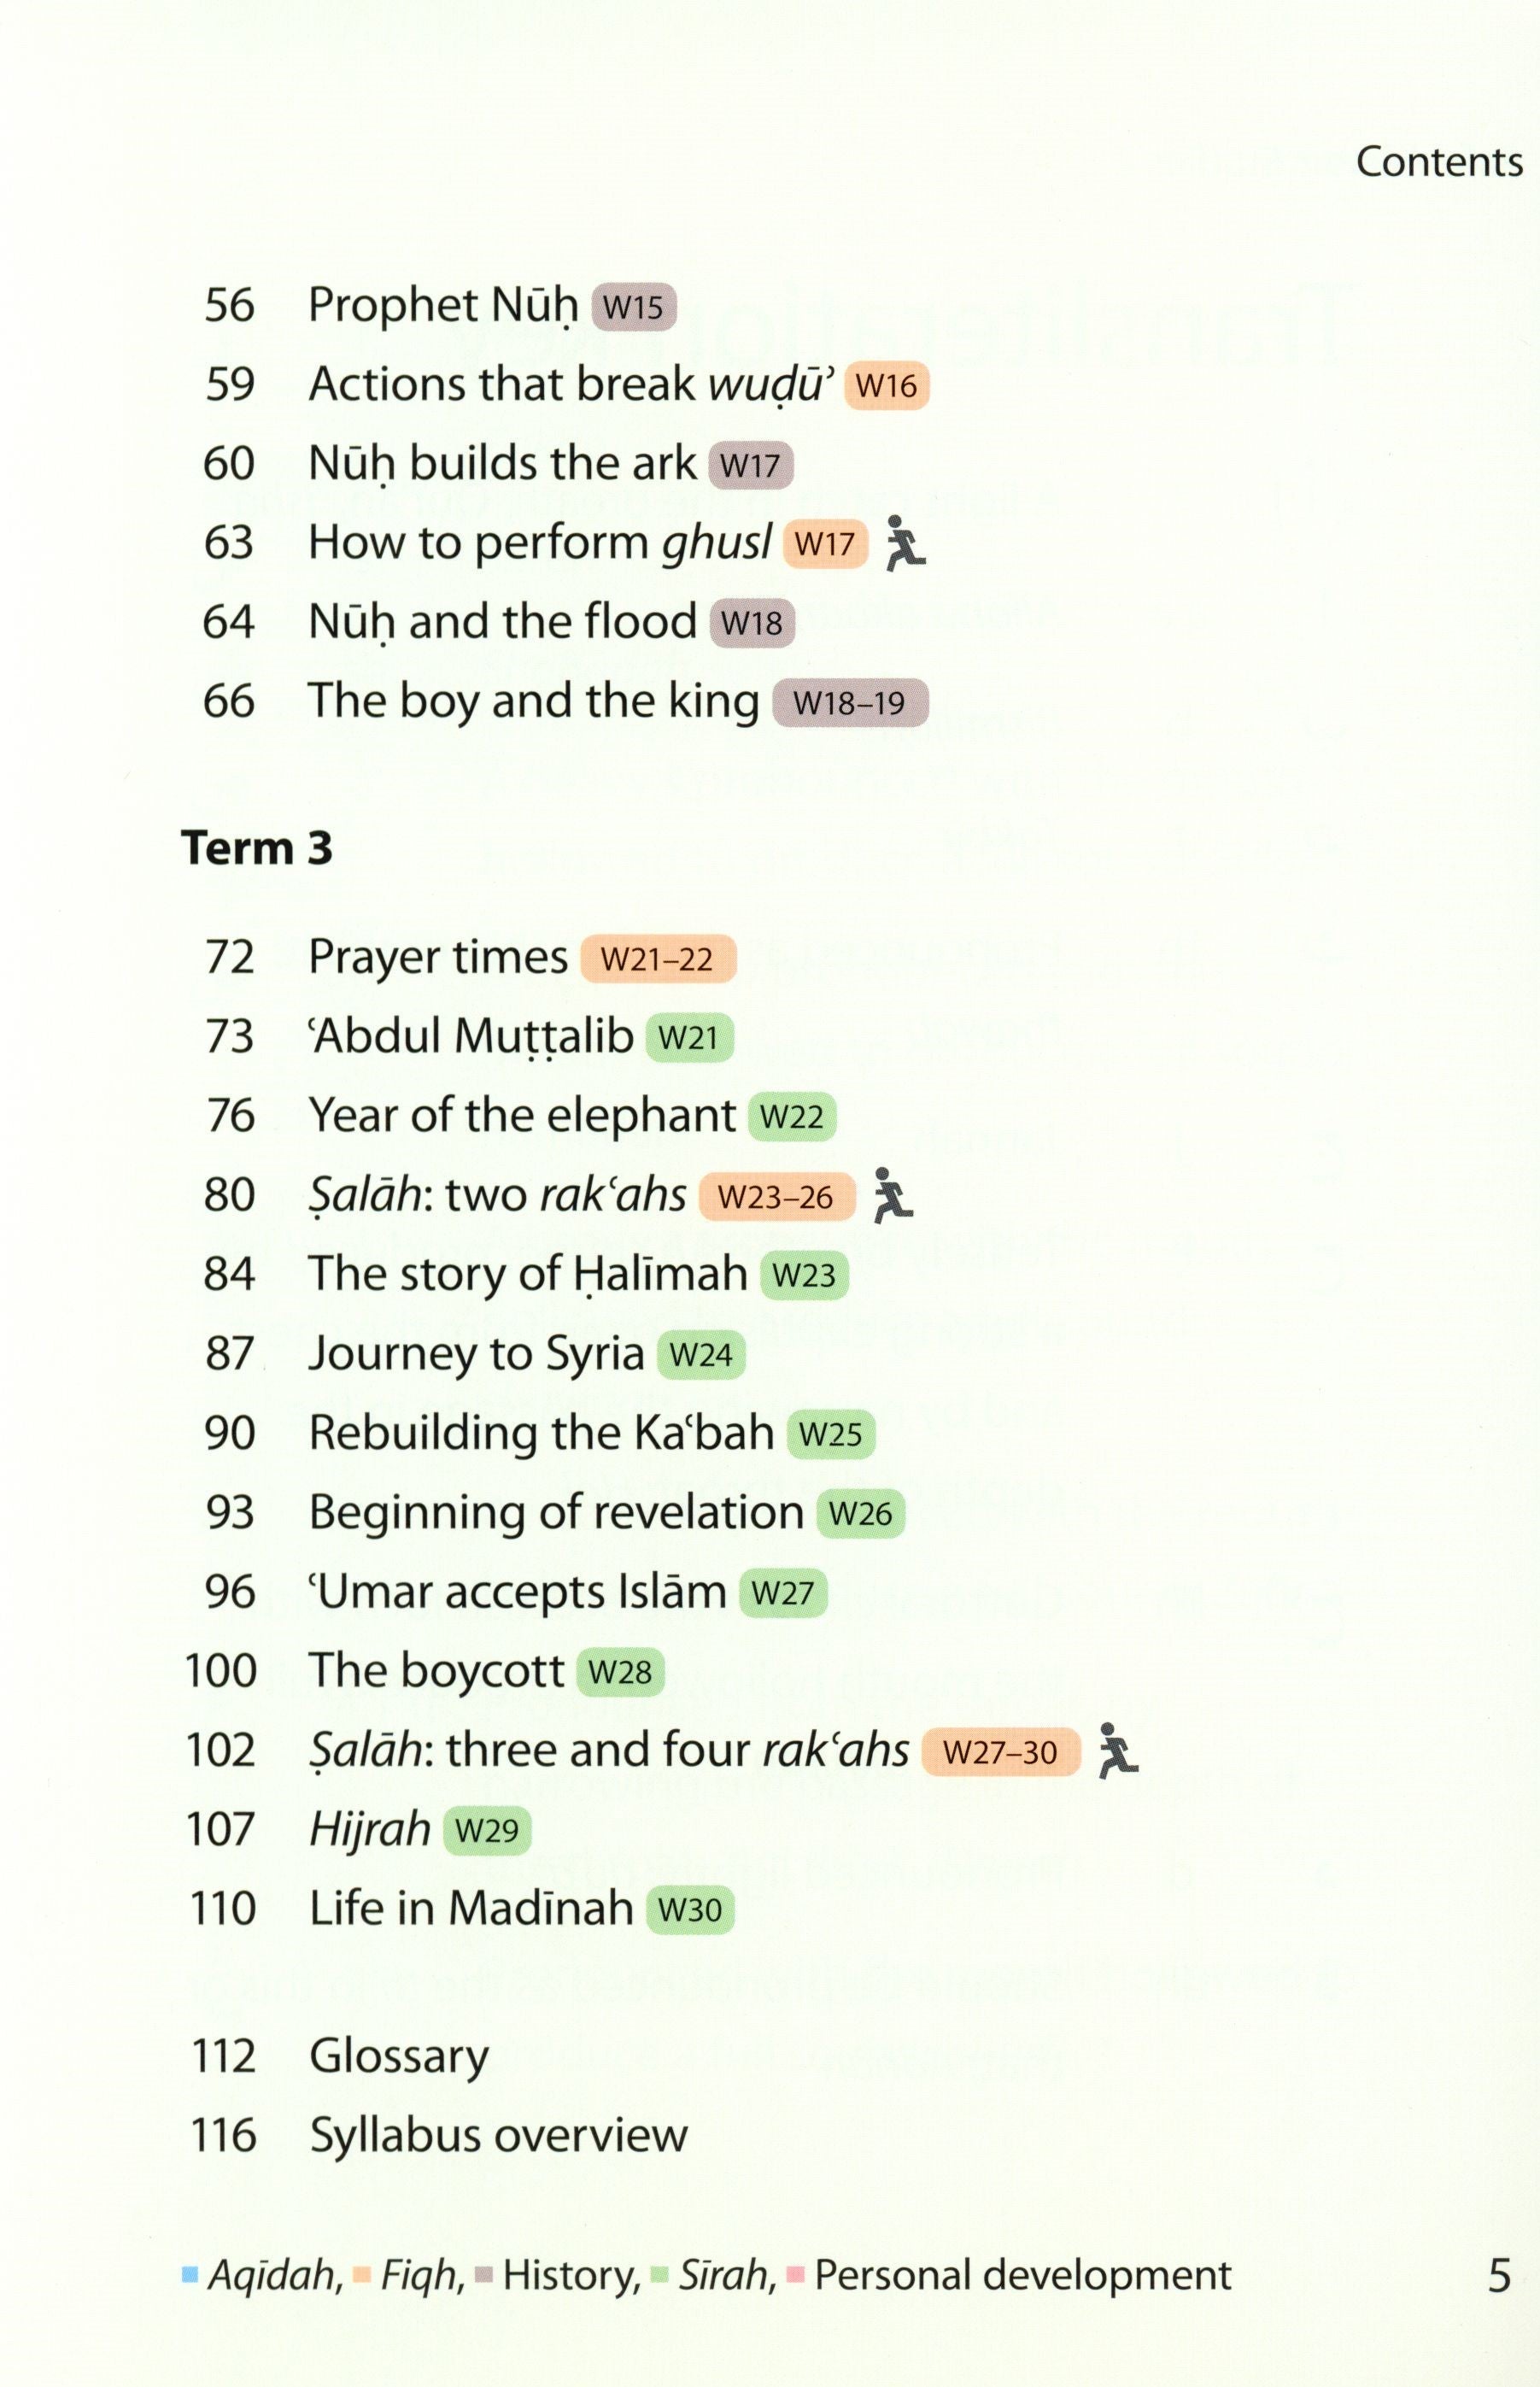 Safar Islamic Studies Textbook 2